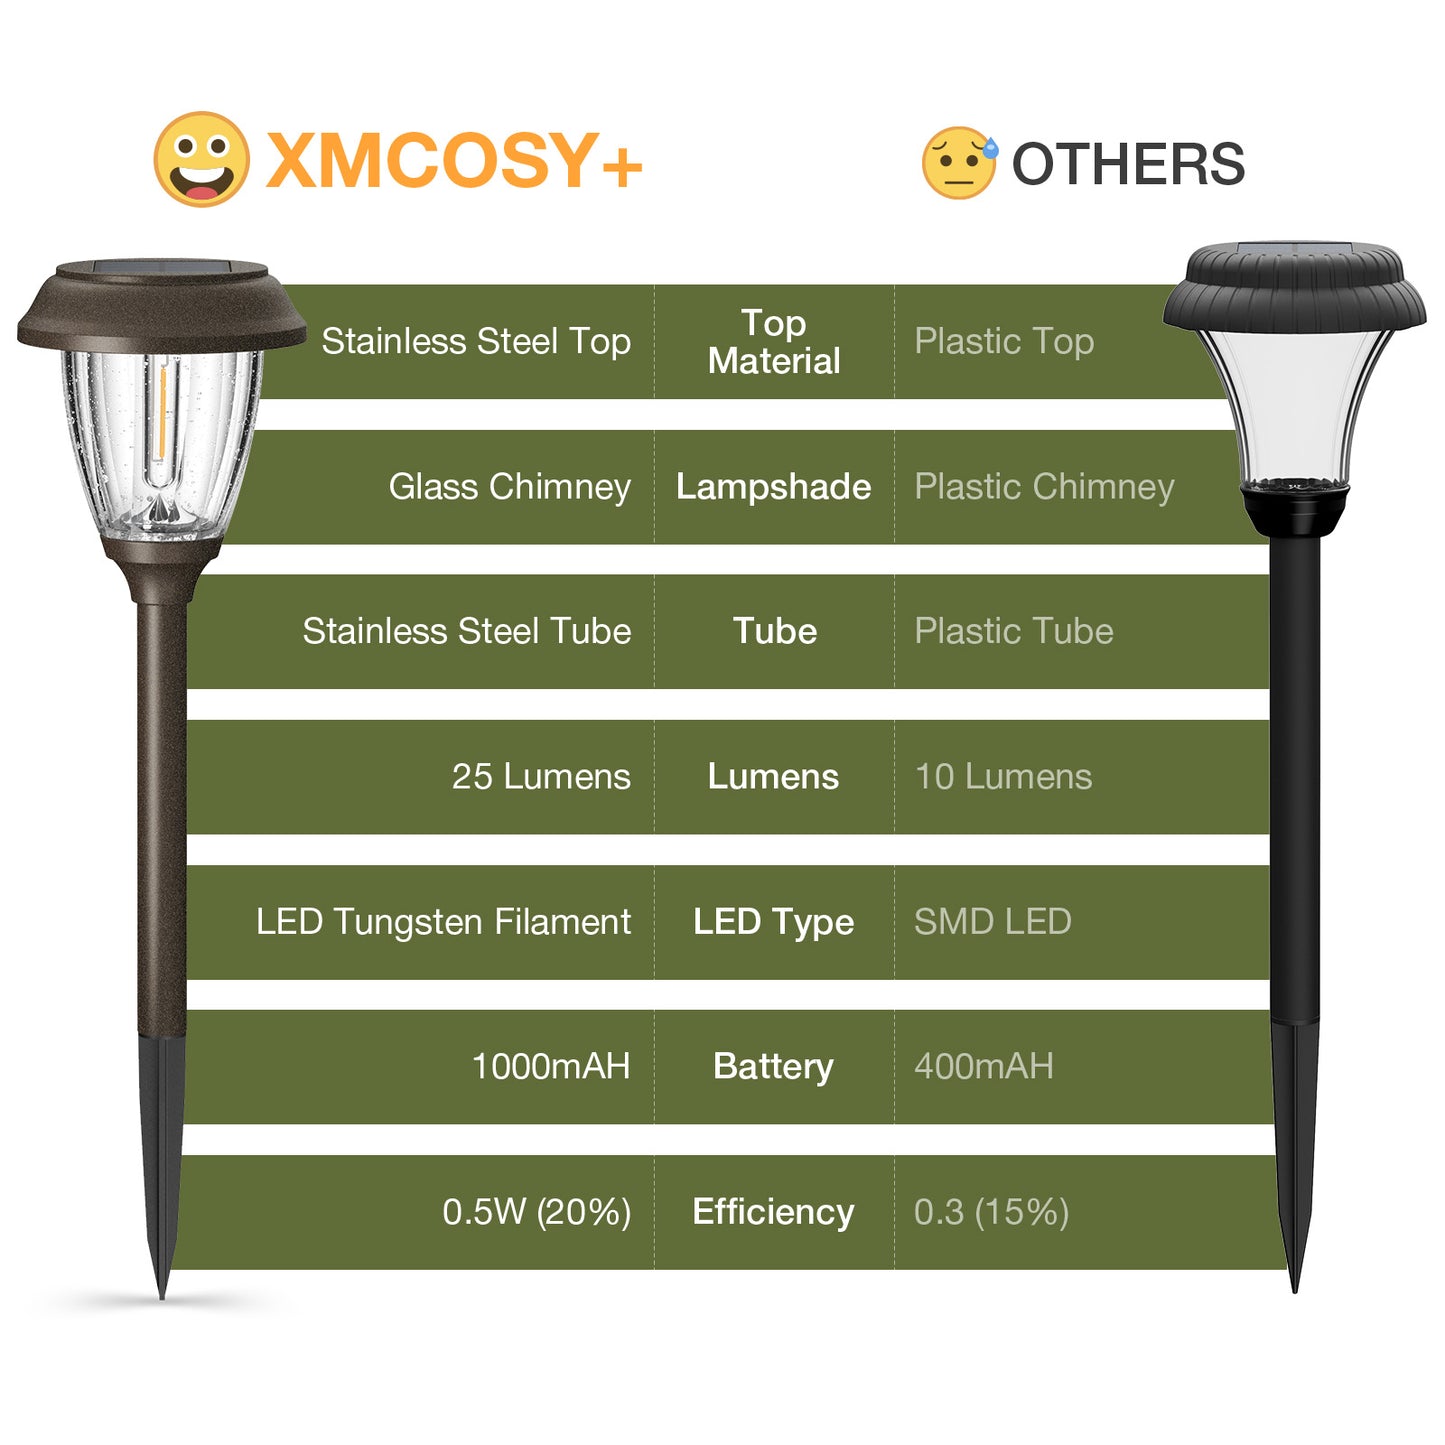 XMCOSY+ High Lumens Reddish-Brown Solar Pathway Lights - 6 Pack